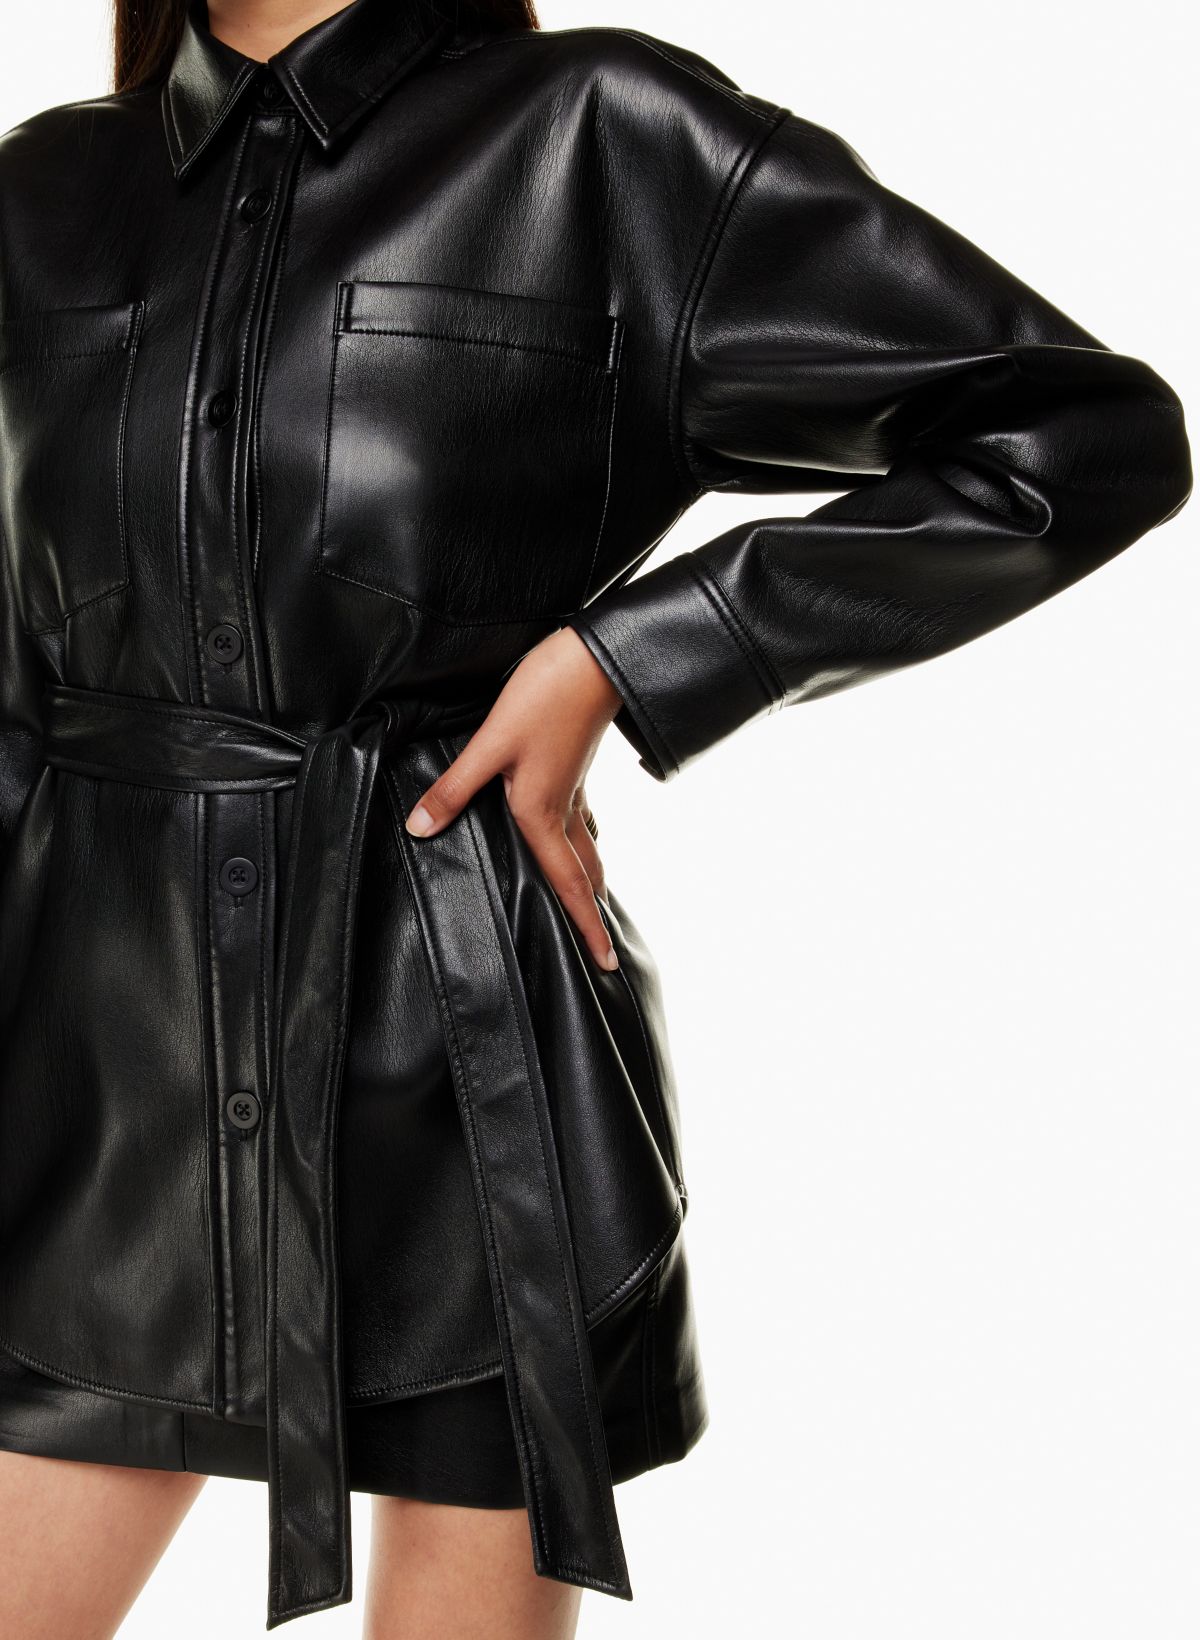 Ava - Black Classic Leather